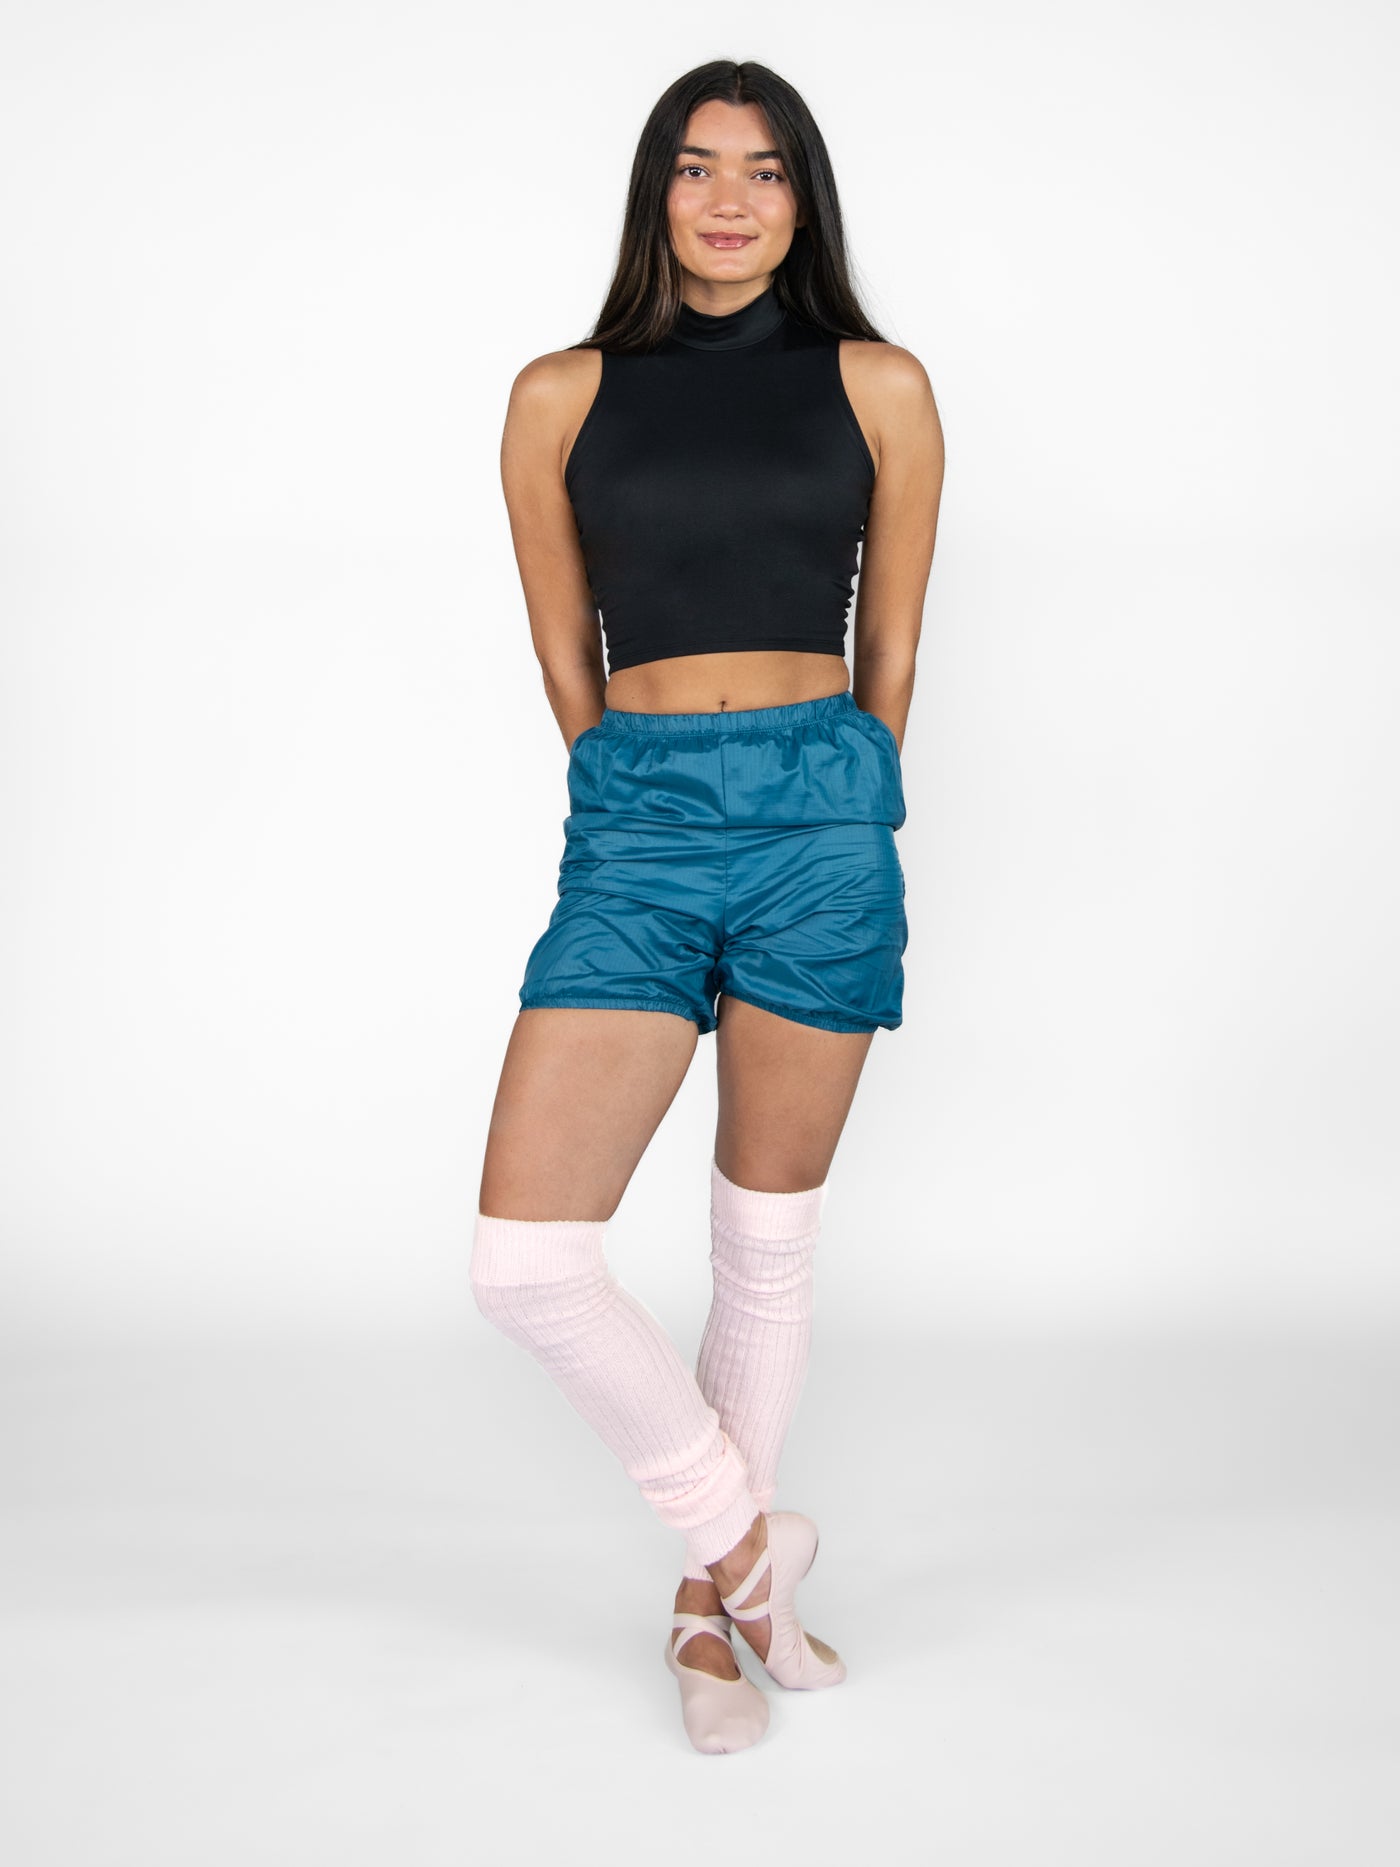 Daydance Teen Girls Petite Women Ripstop Dance Pants/Shorts for